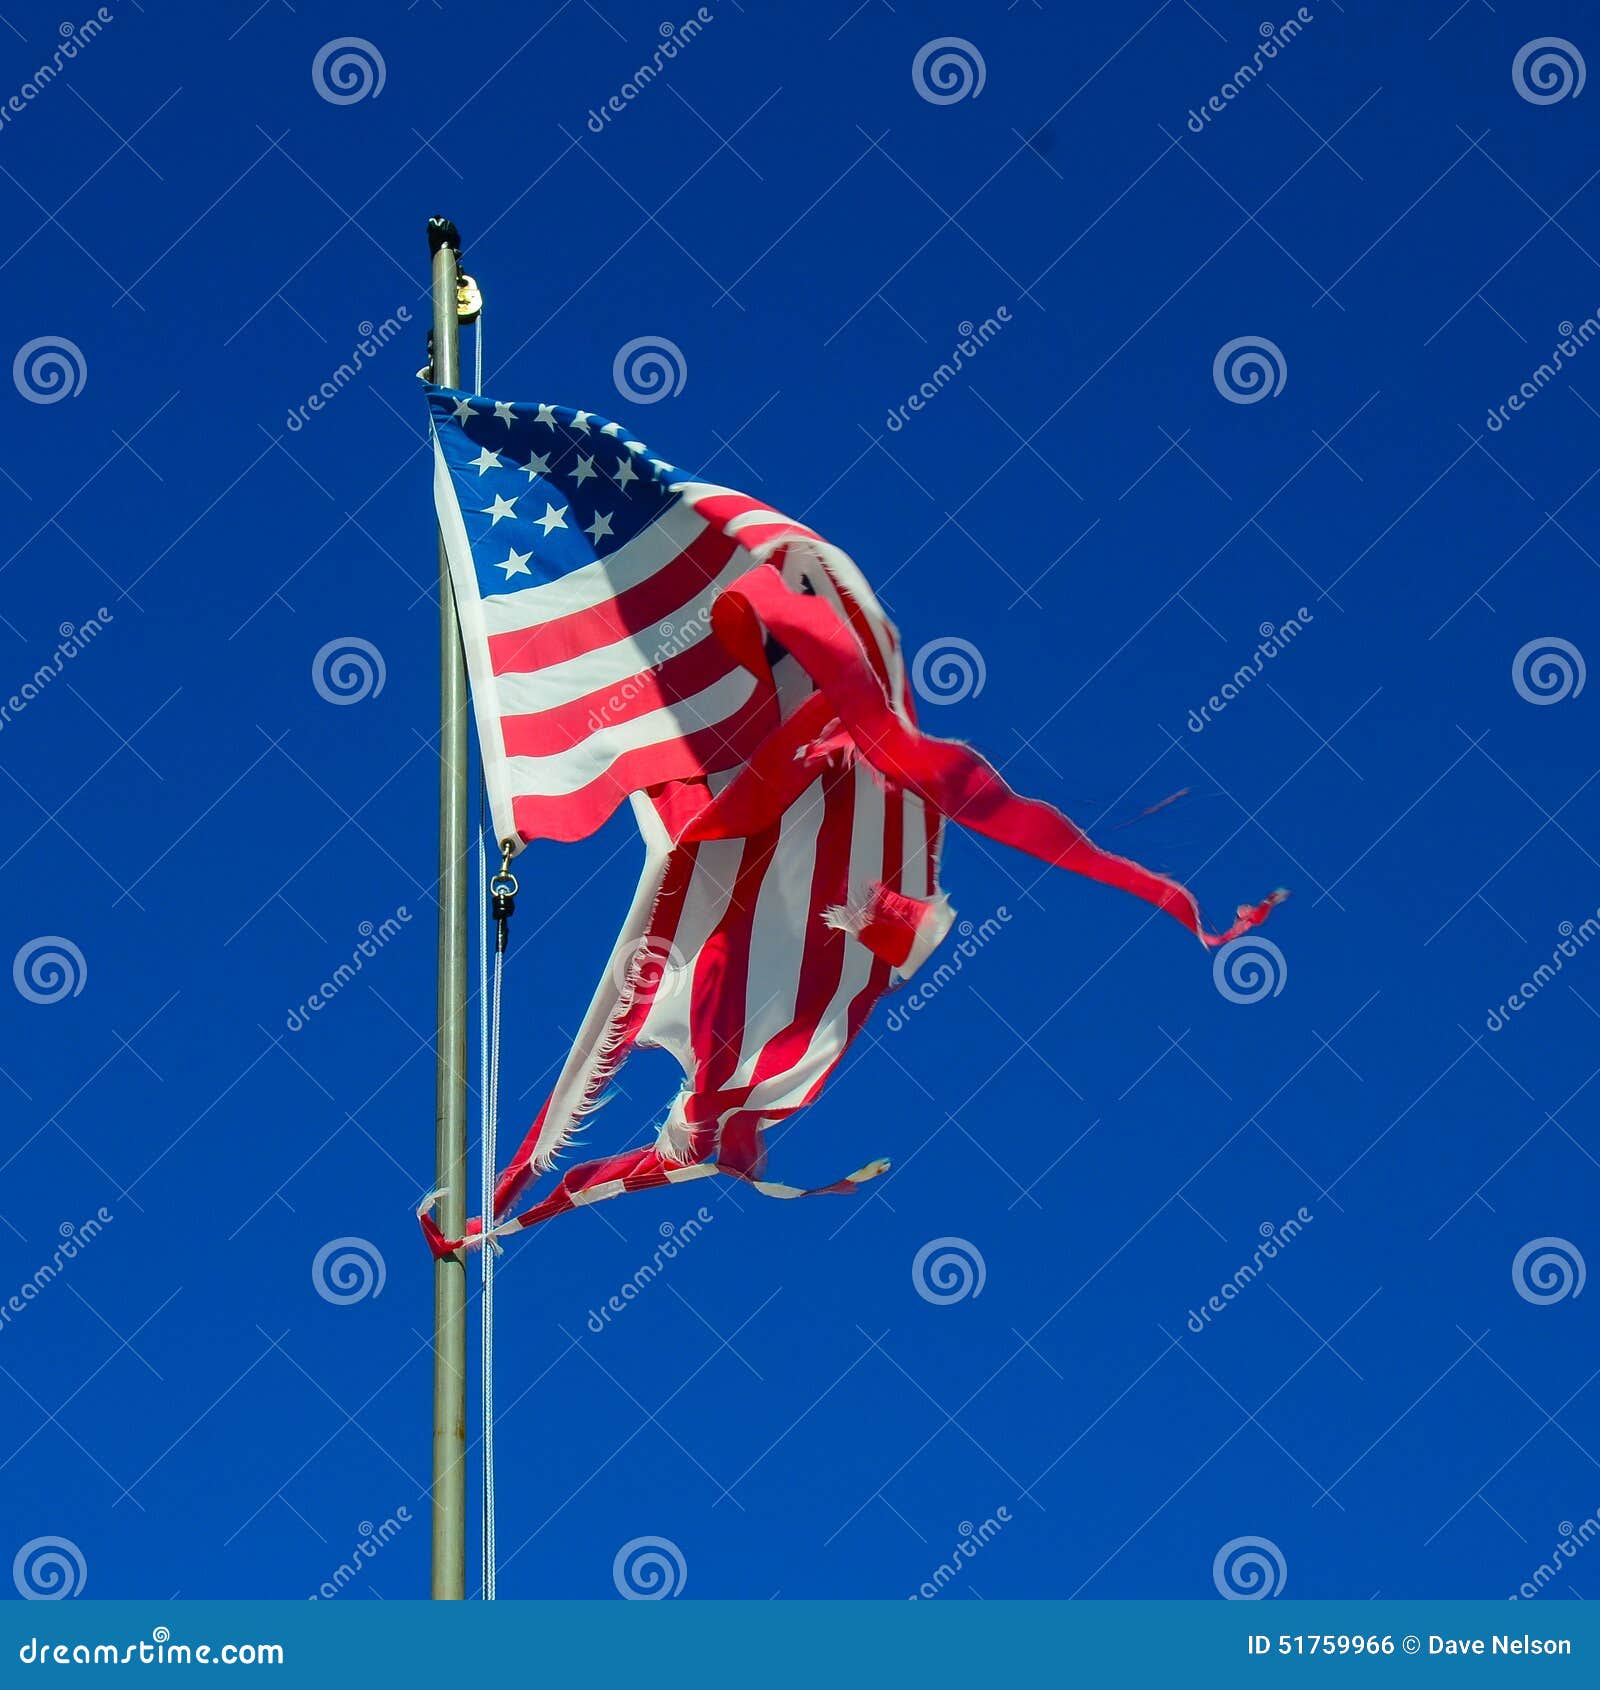 tattered-twisted-american-flag-worn-shredded-flapping-wind-51759966.jpg